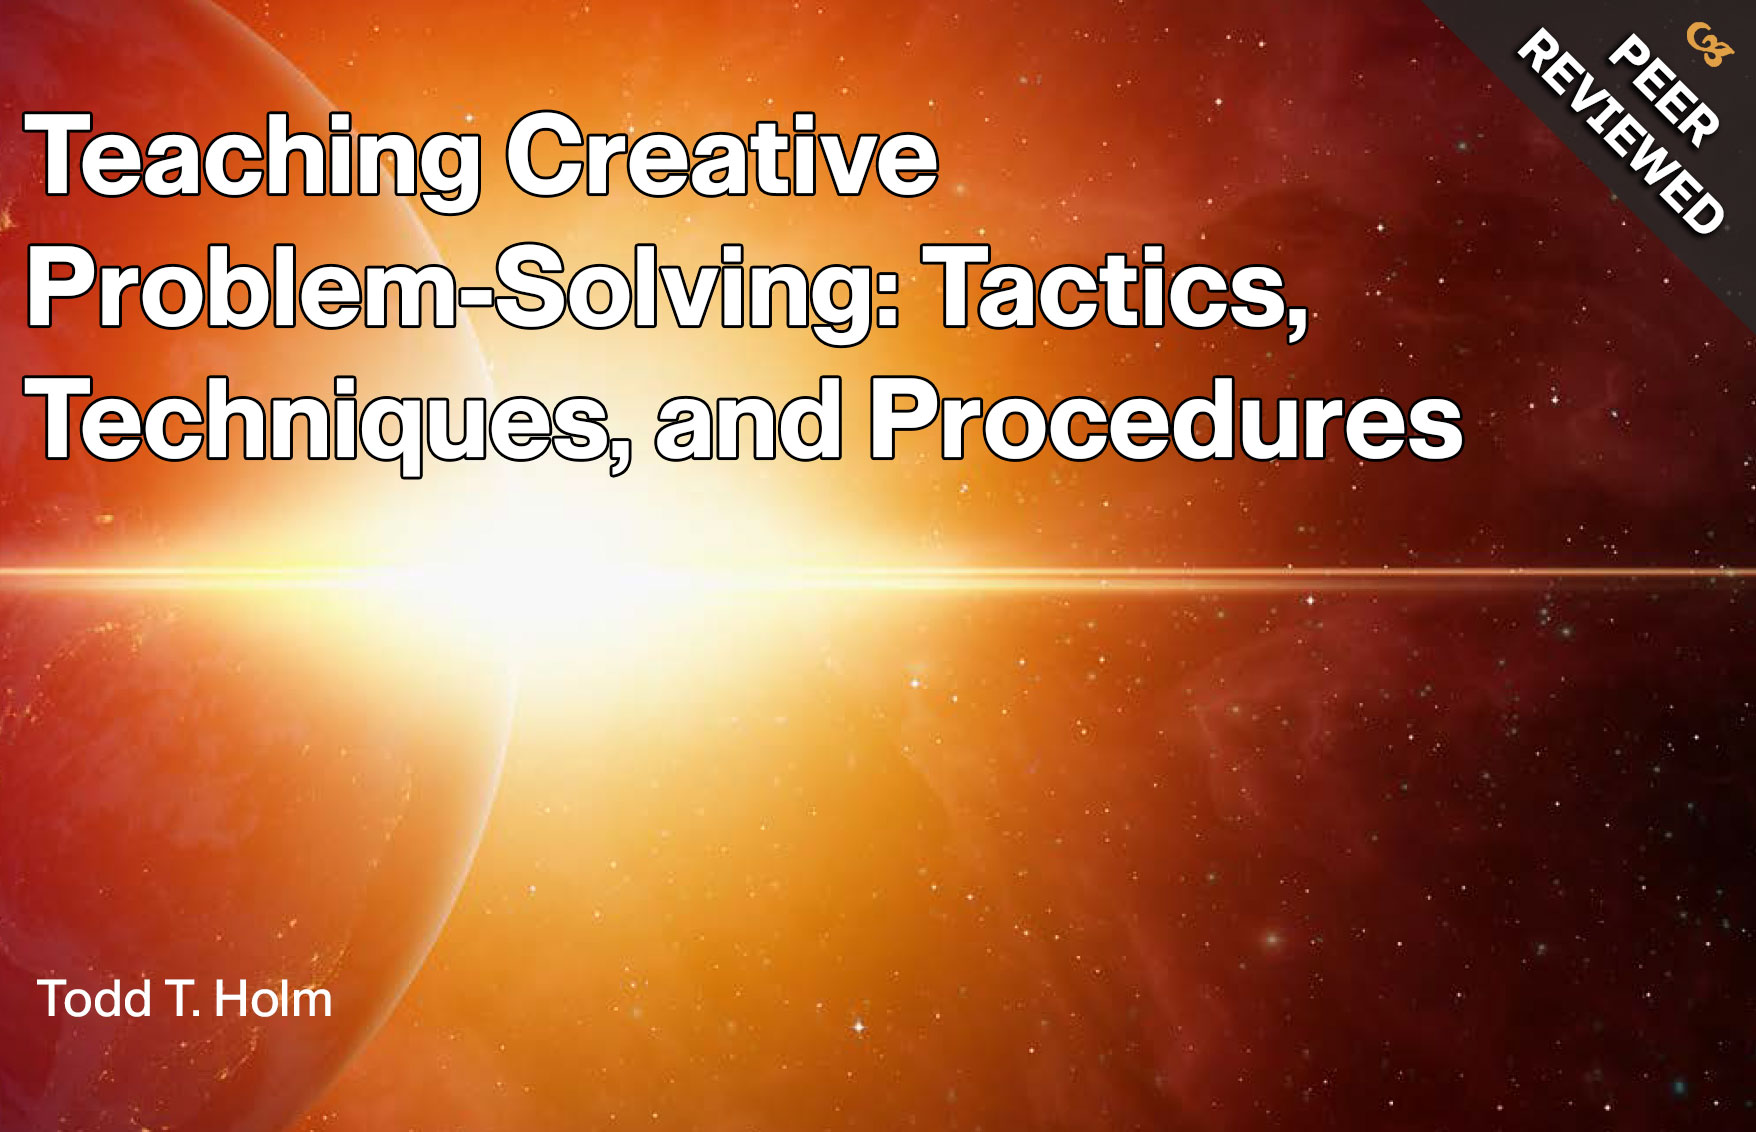 Teaching Creative Problem-Solving